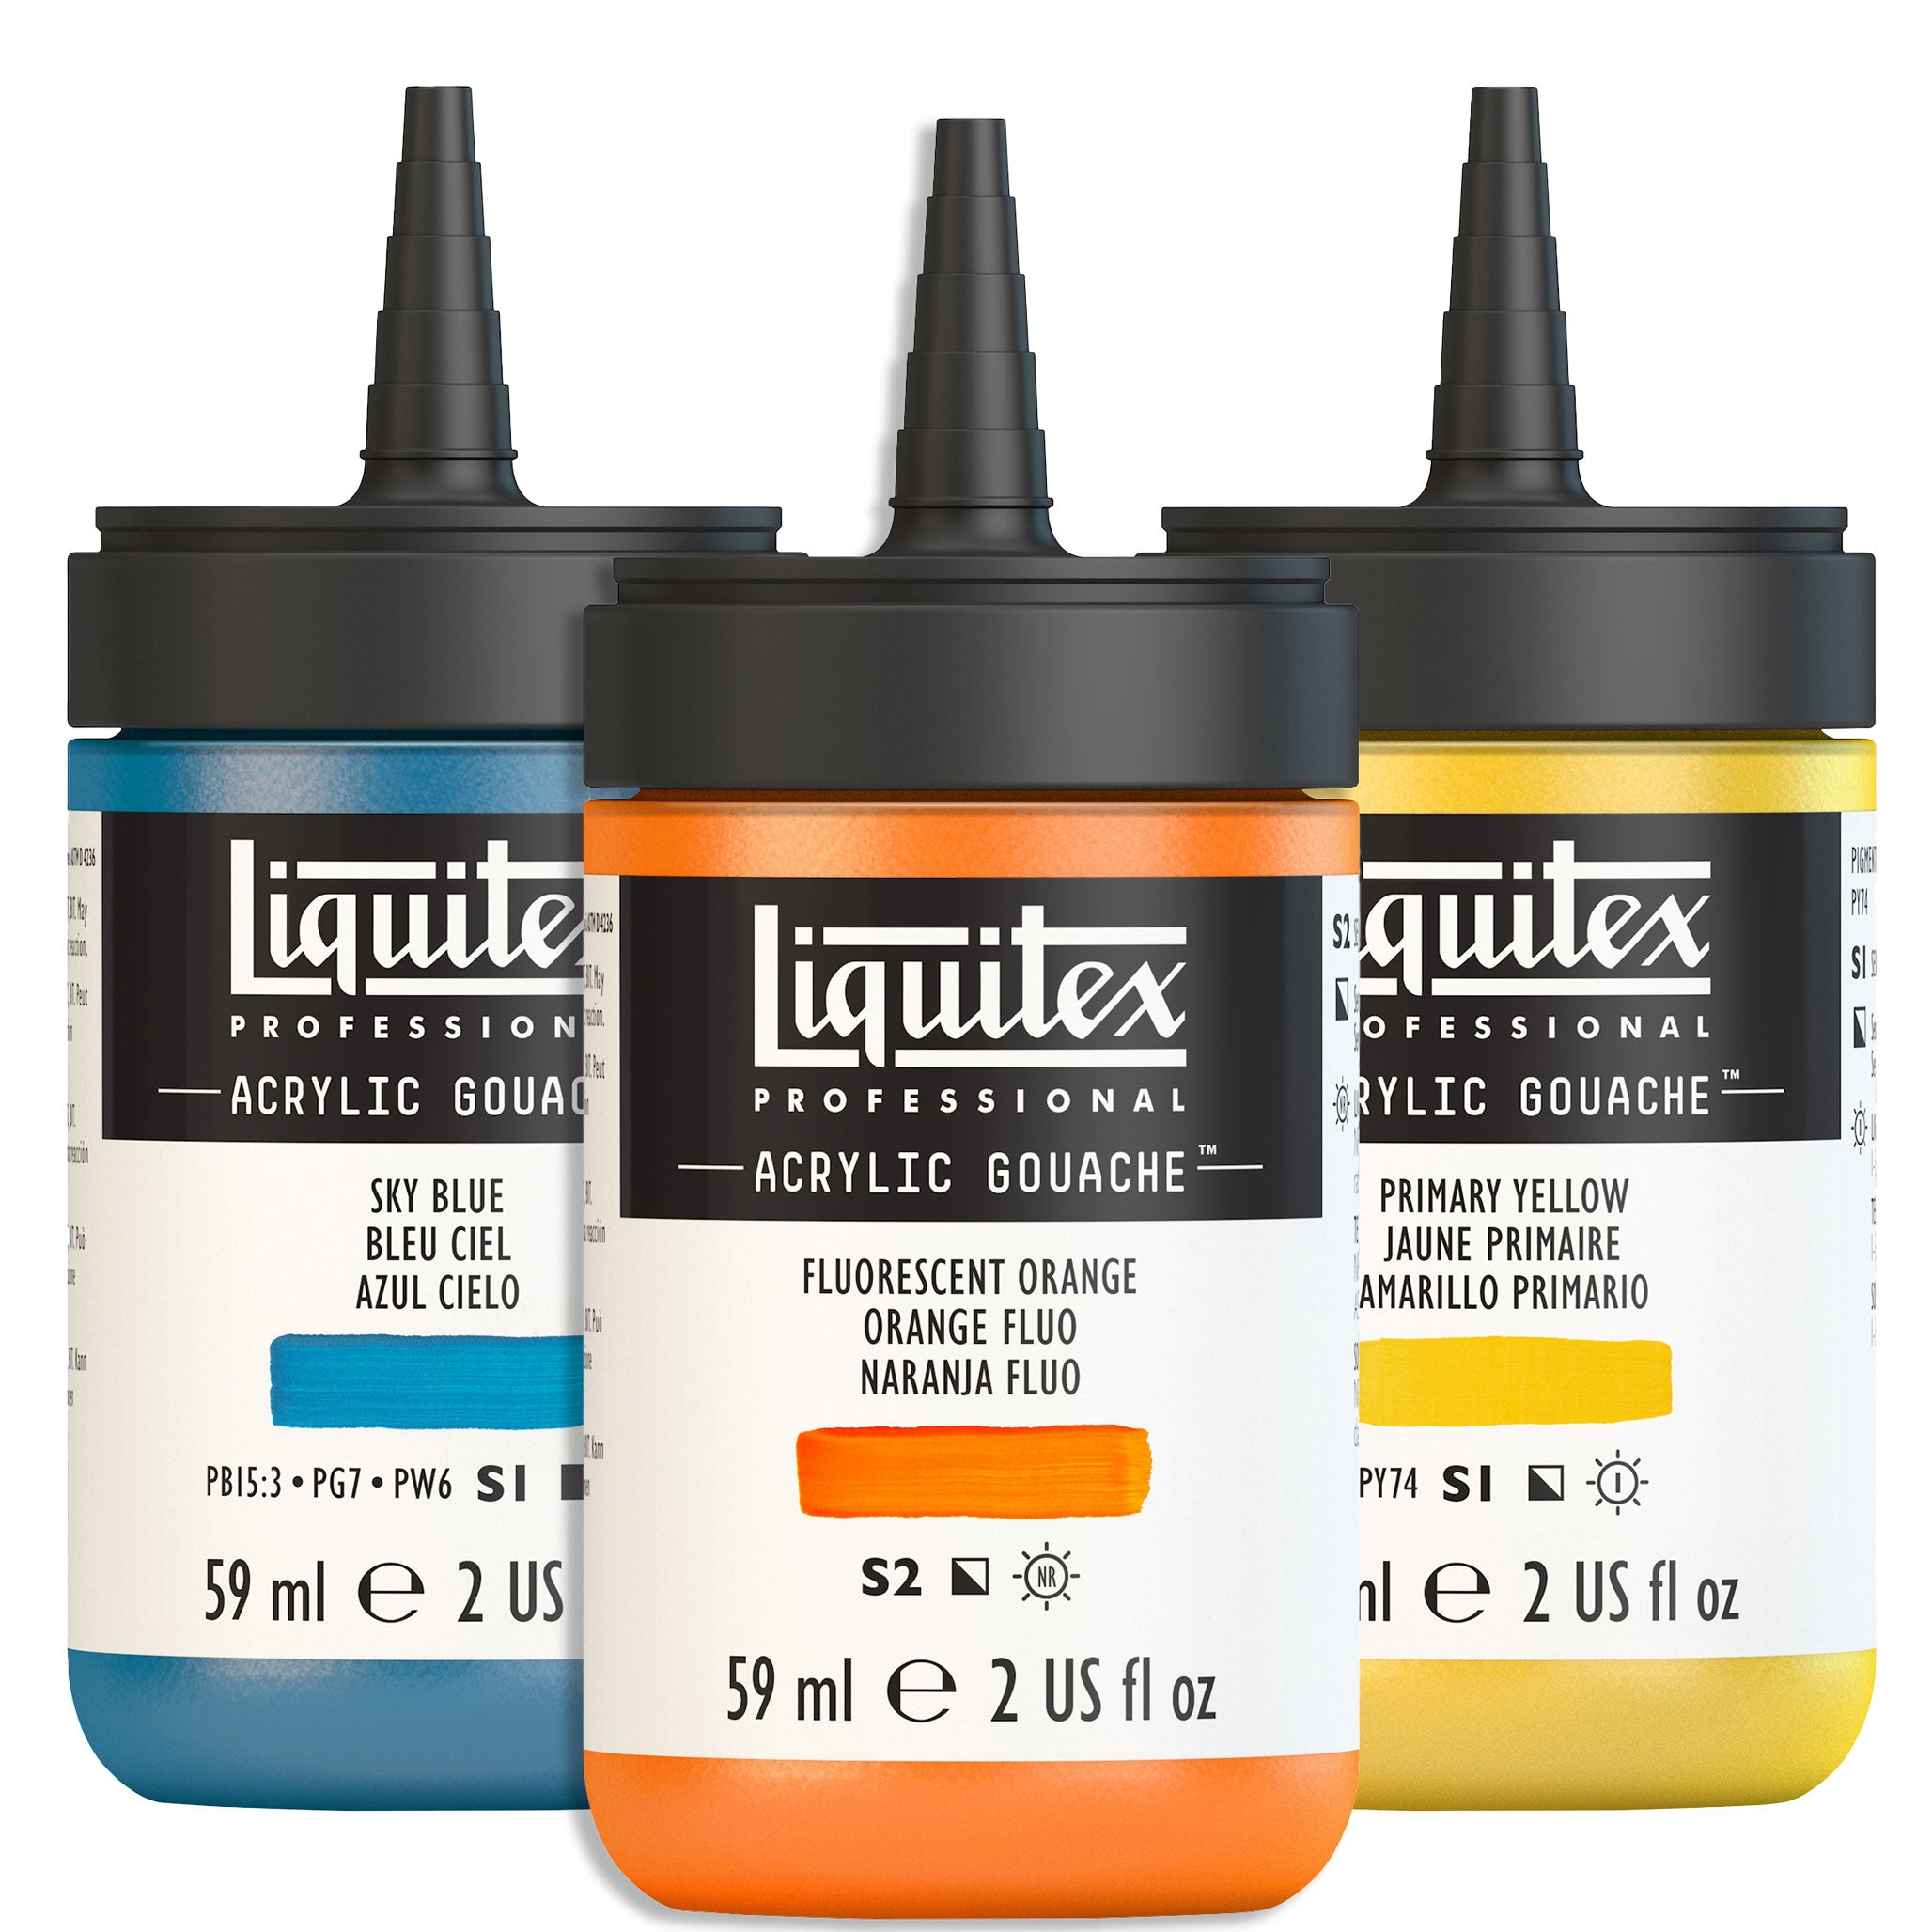 Liquitex Professional Acrylic Gouache Sets